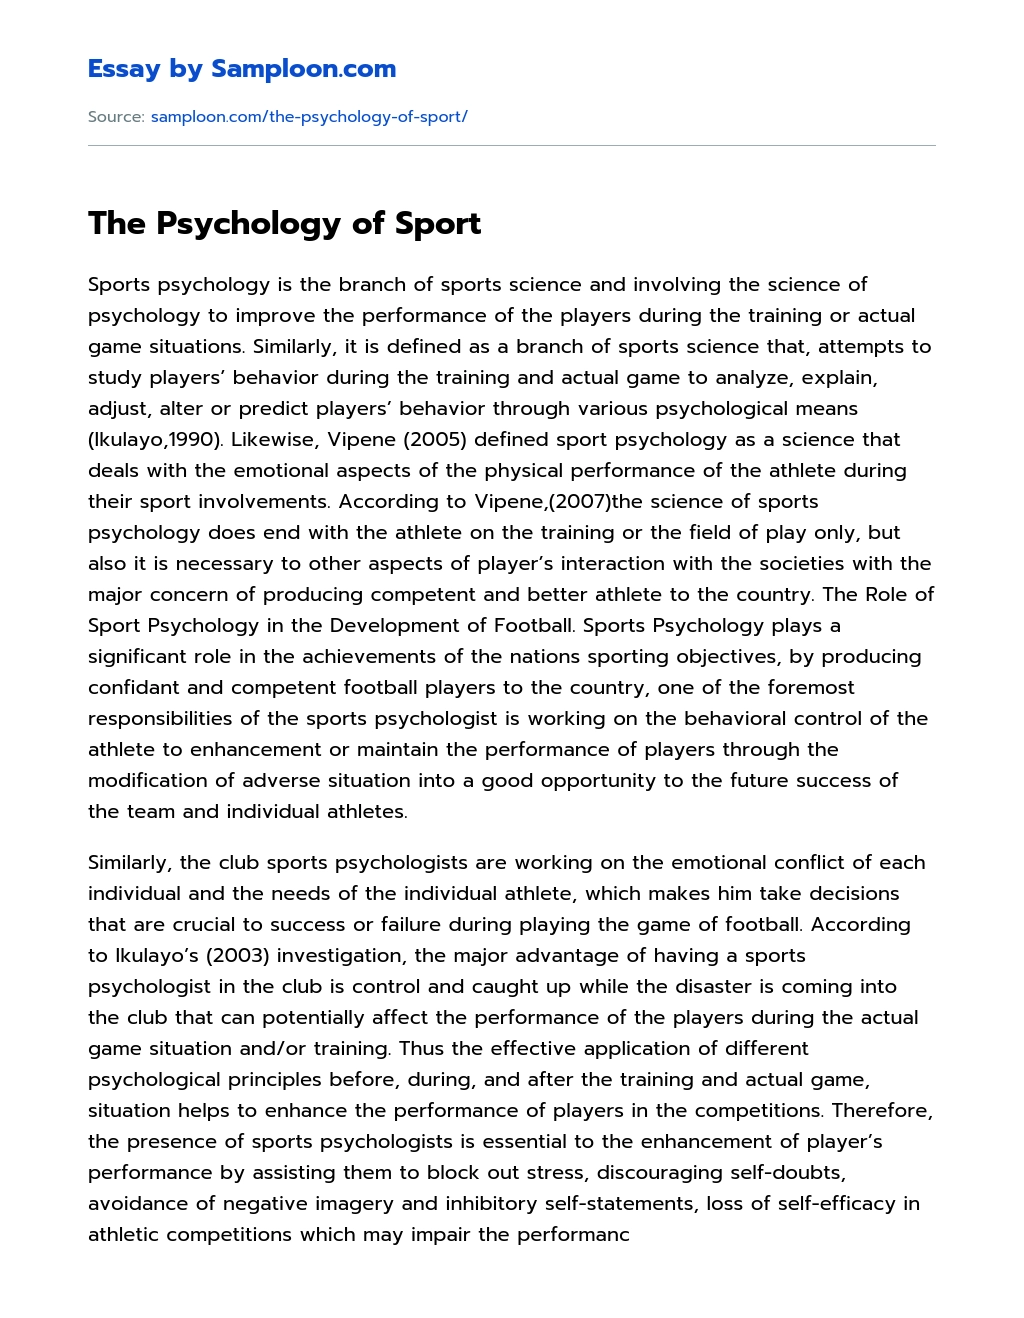 The Psychology of Sport essay